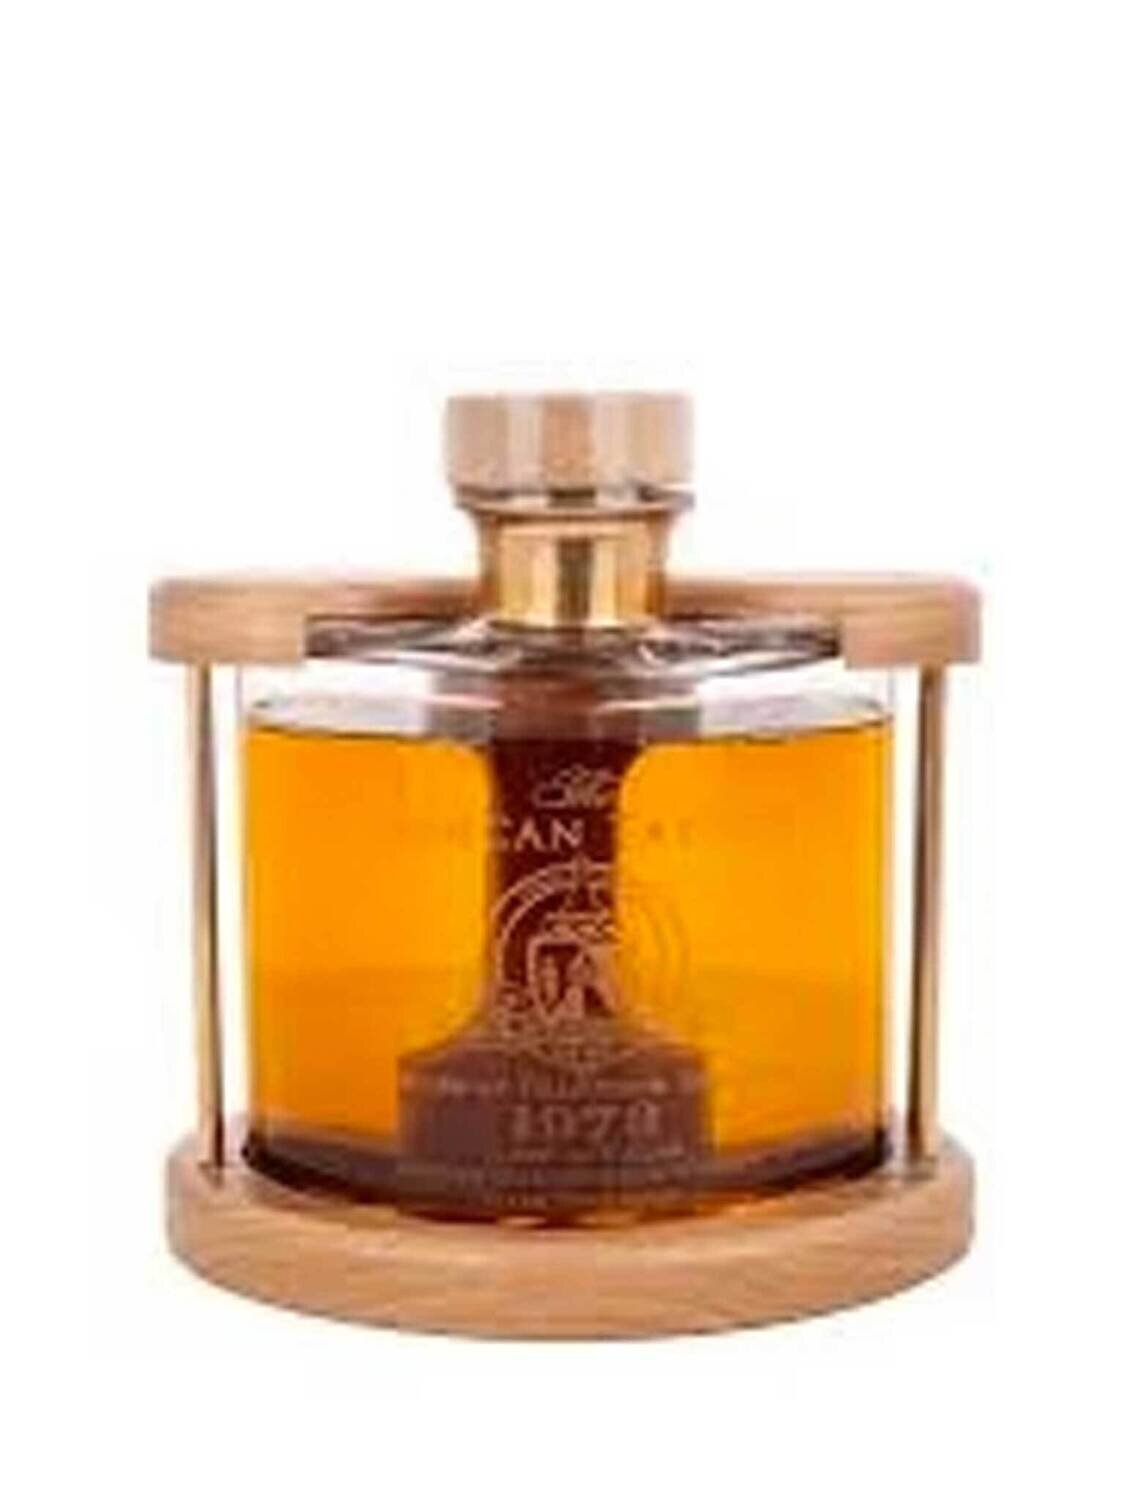 Duncan Taylor 1973 Teaninich "Tantalus" 40 Year Old Highland Single Malt Scotch Whisky Cask #20236 51.5% ABV 750mL